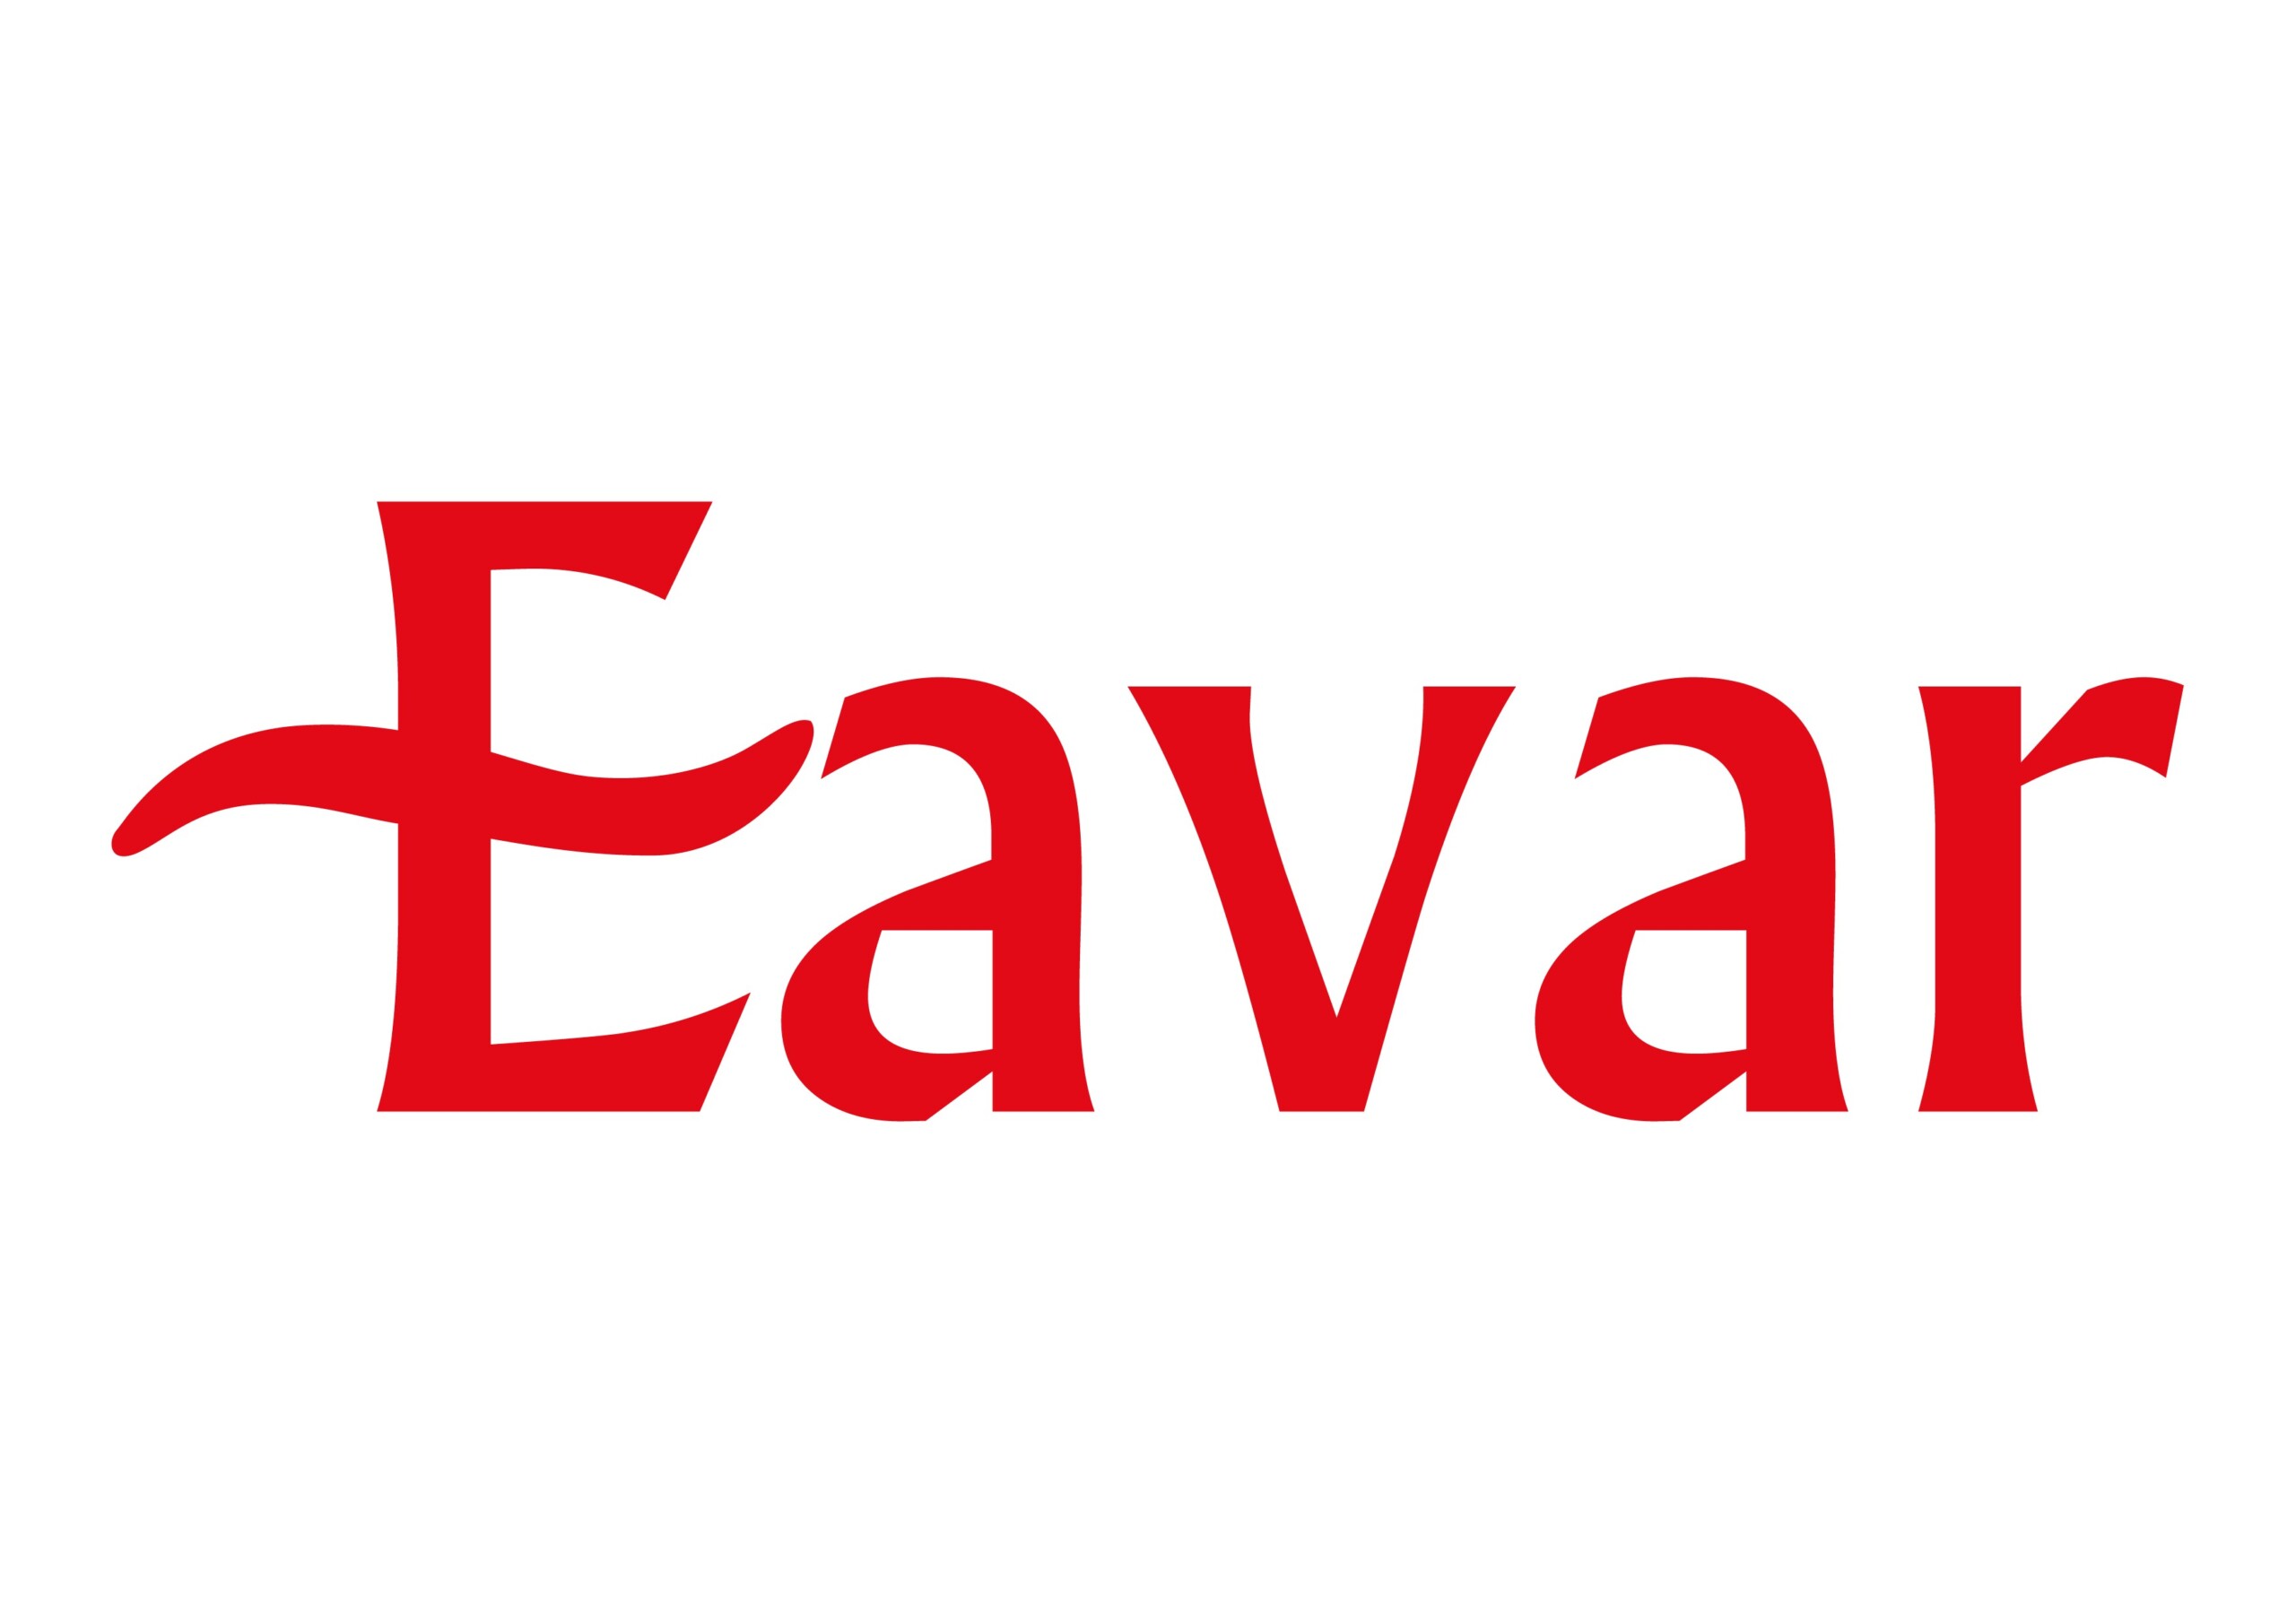 Eavar Travel Agency 